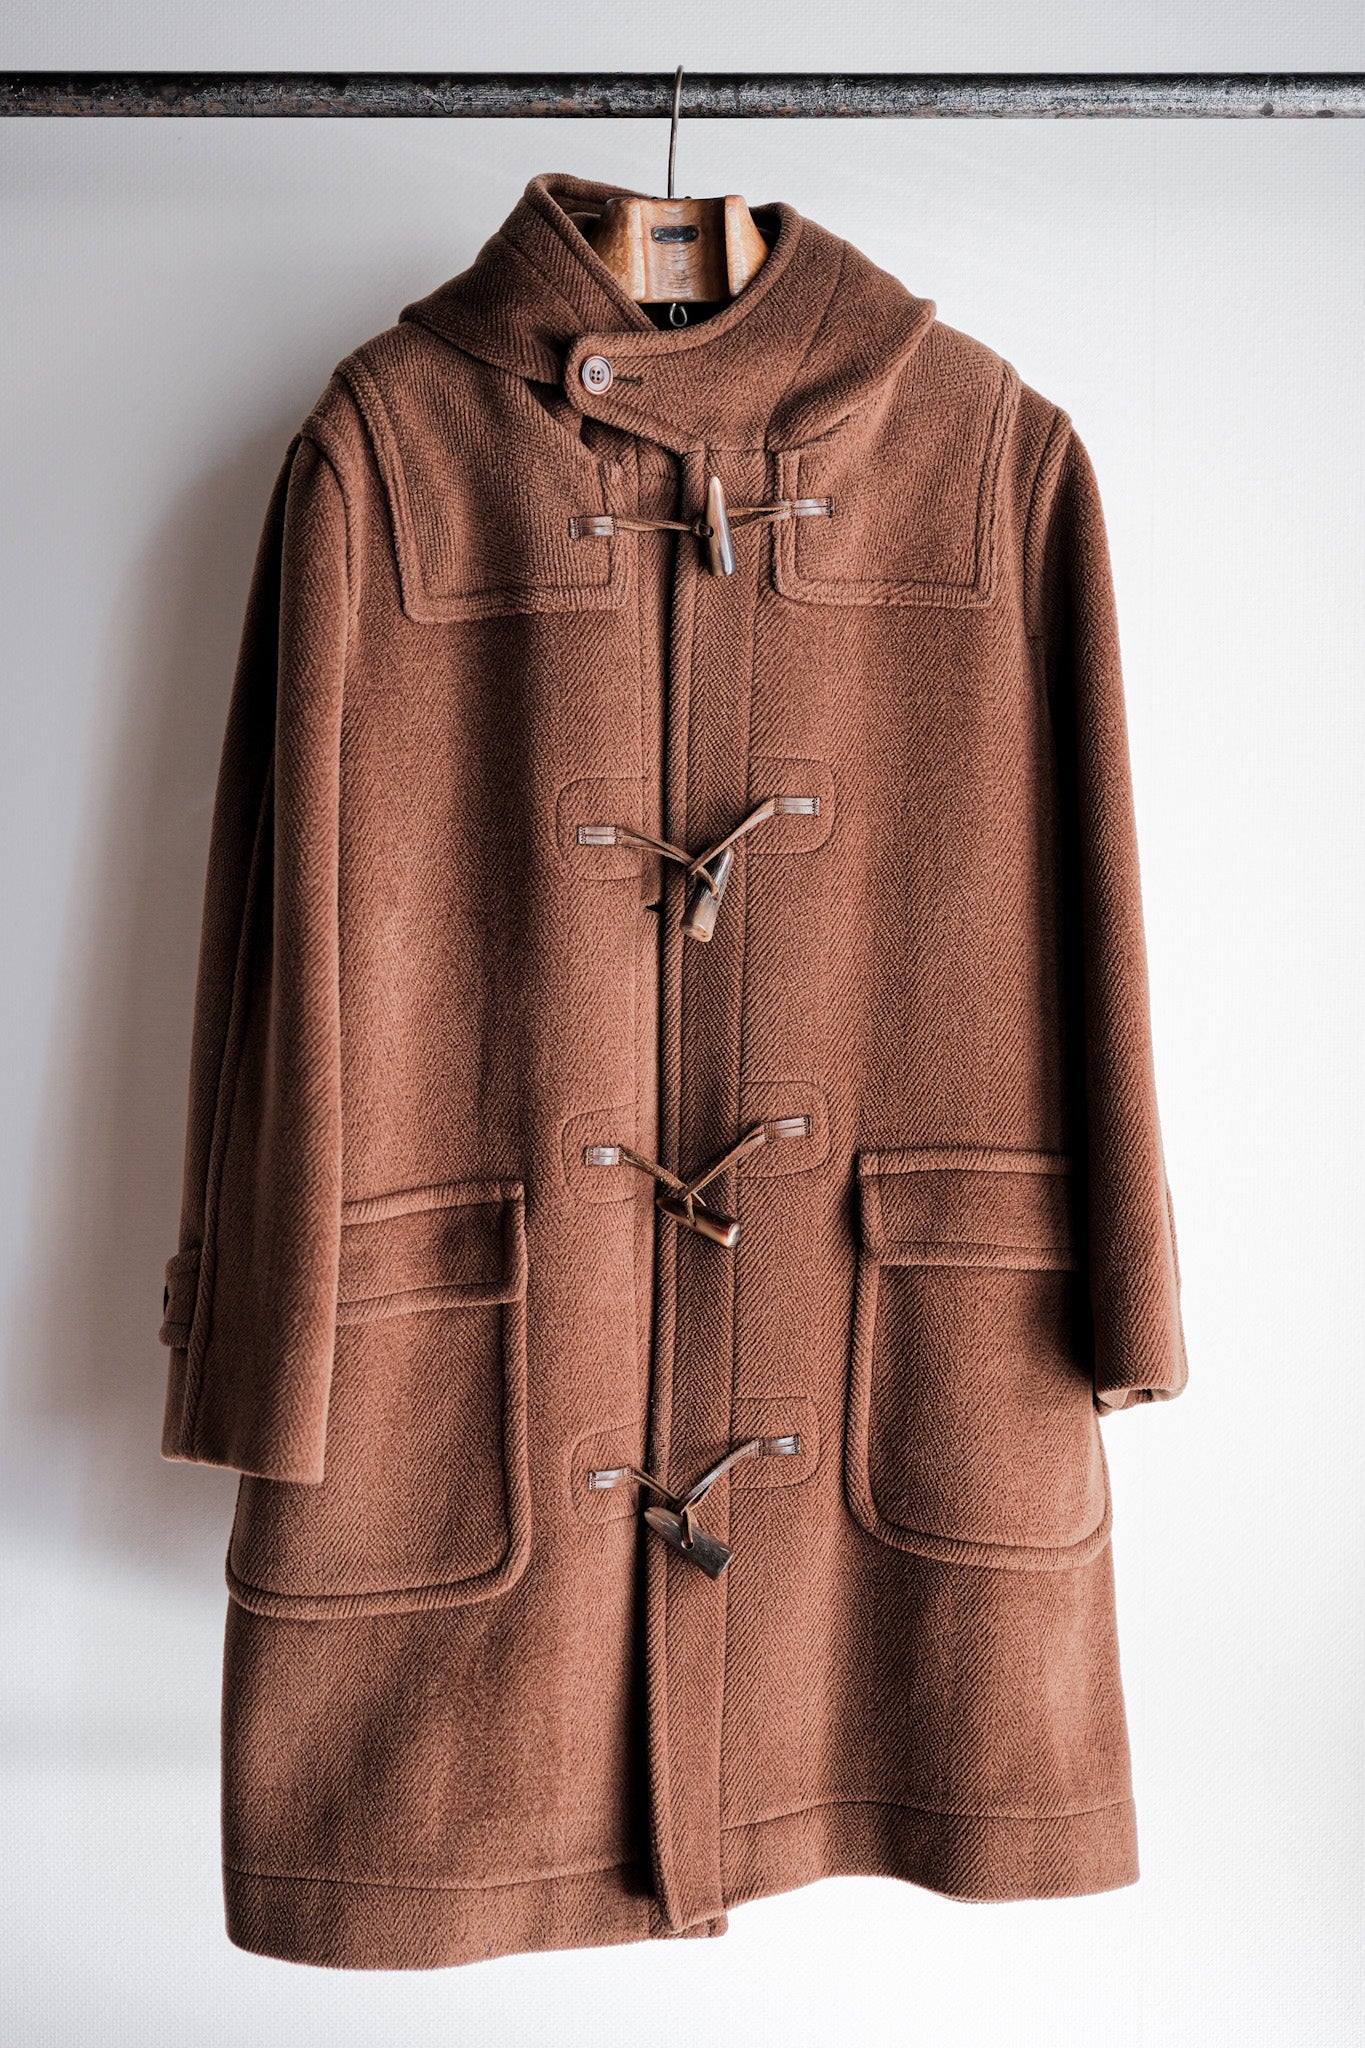 [~ 90's] Old Invertere Wool Duffle Coat "Moorbrook" "De Paz separate Note"